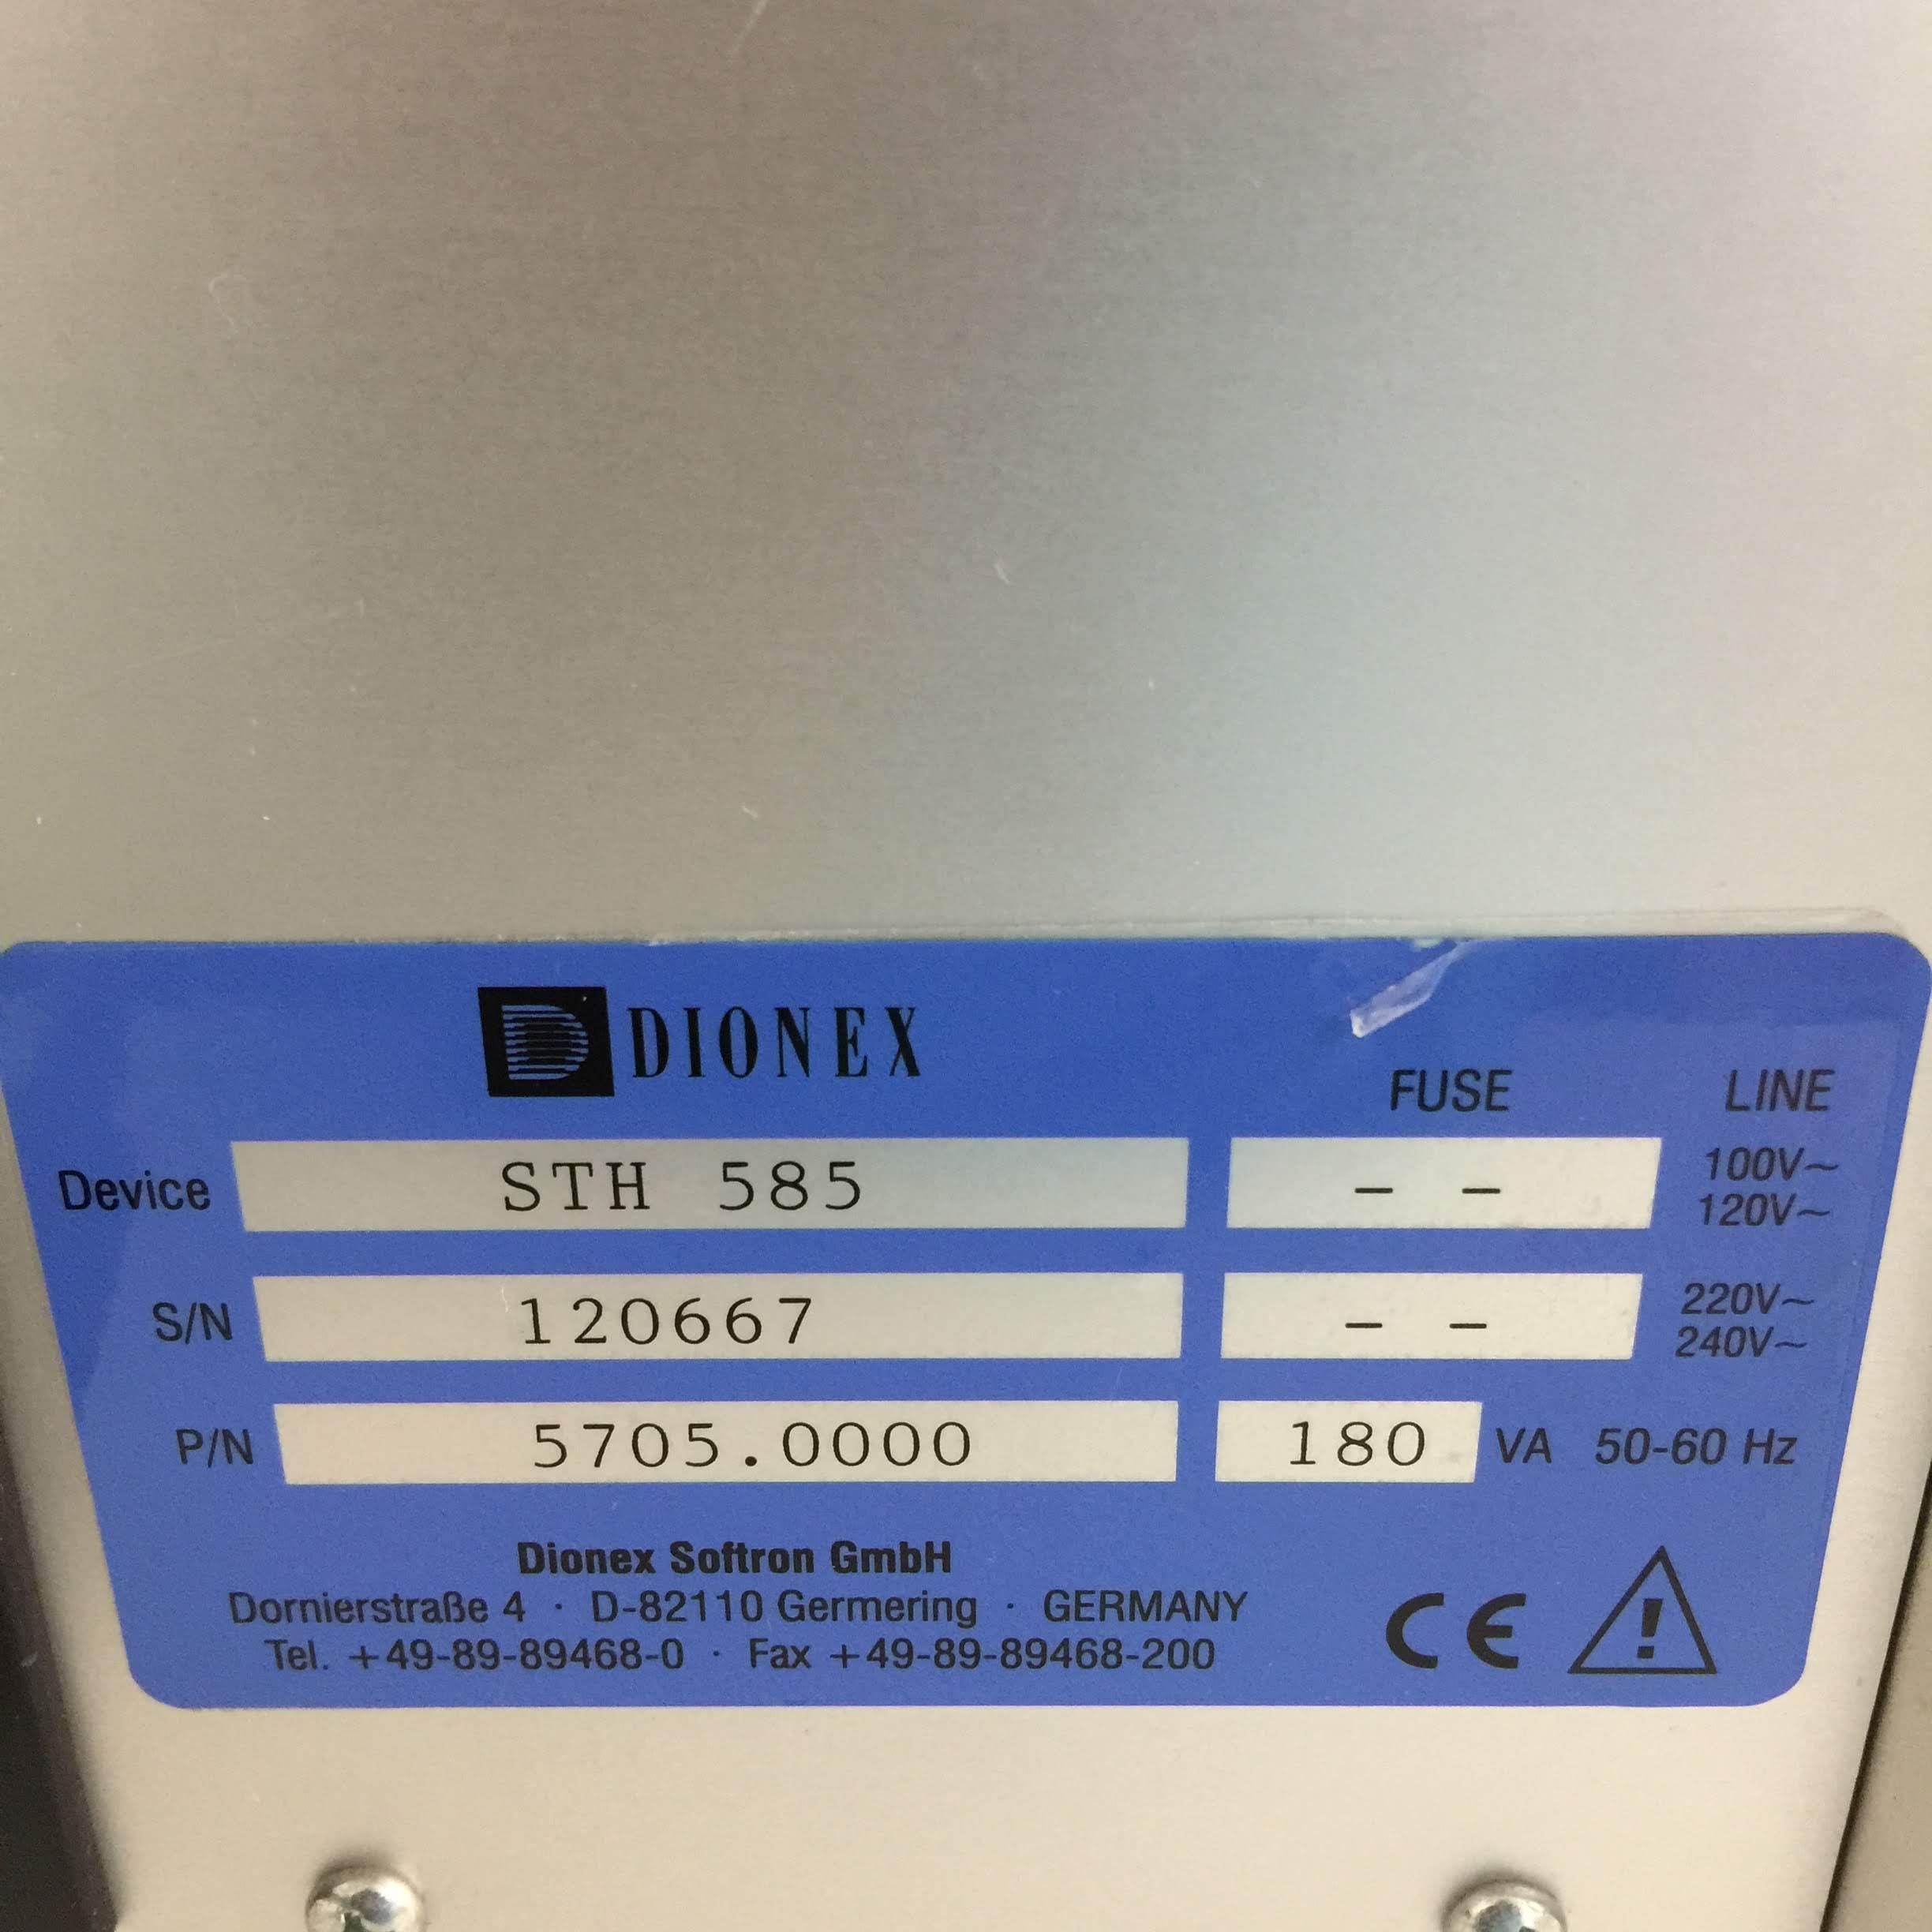 dionex sth 585 column oven & column thermostat